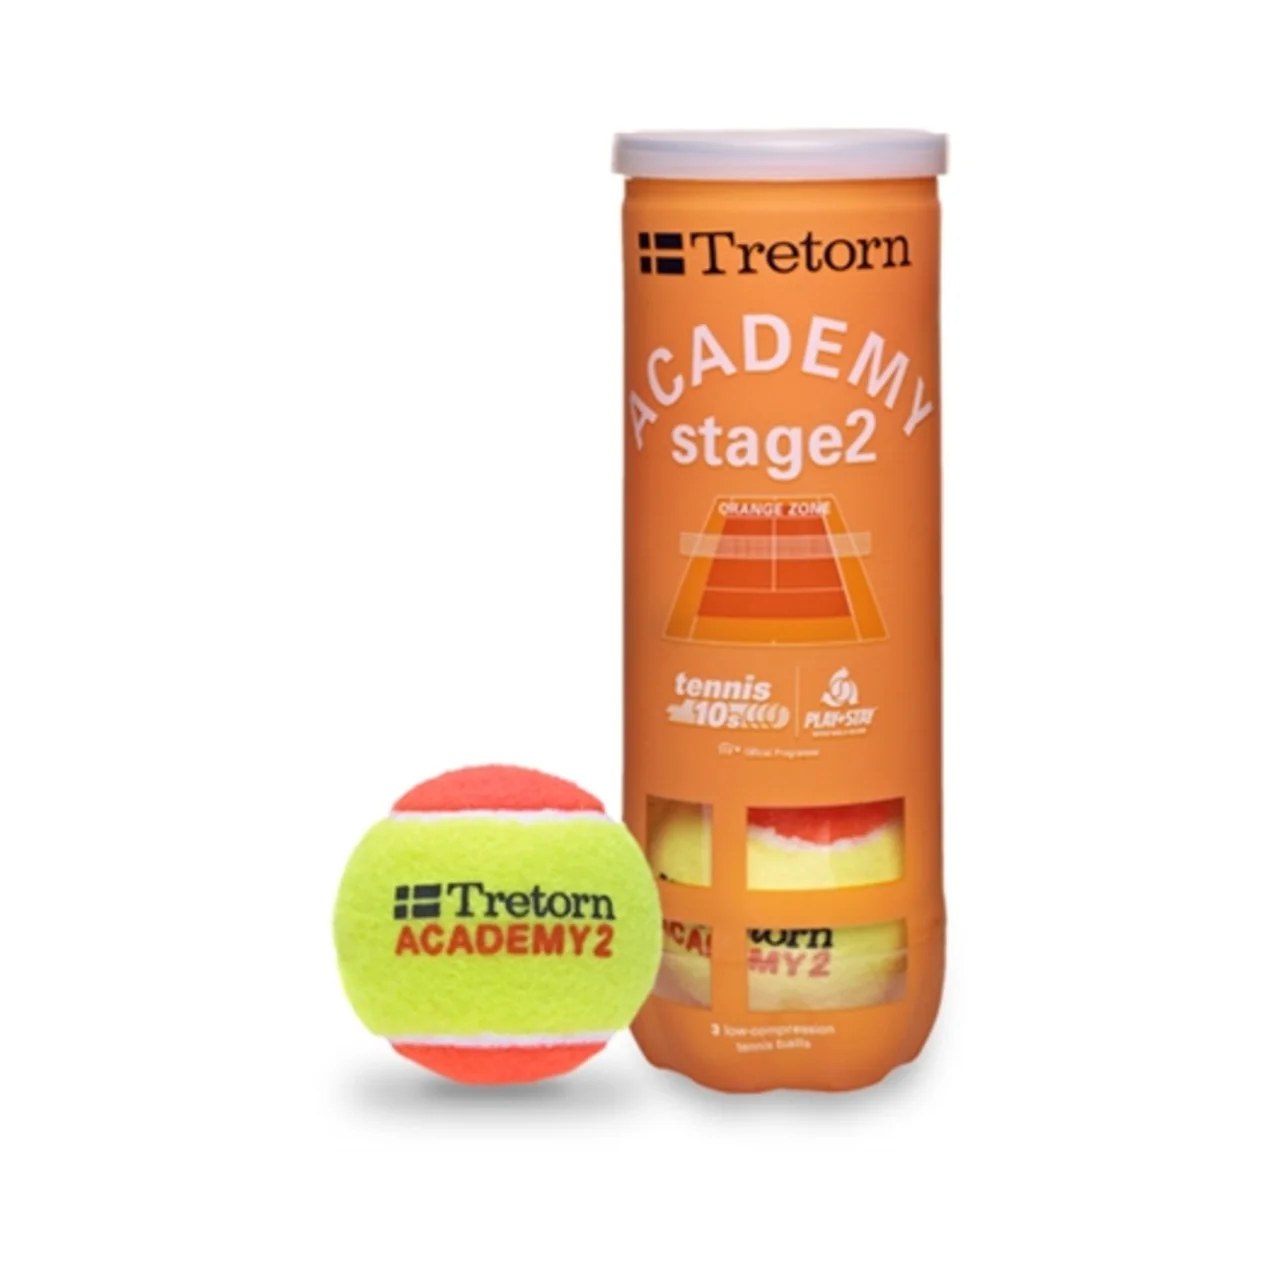 Tretorn Academy Orange Stage 2. 1 tube